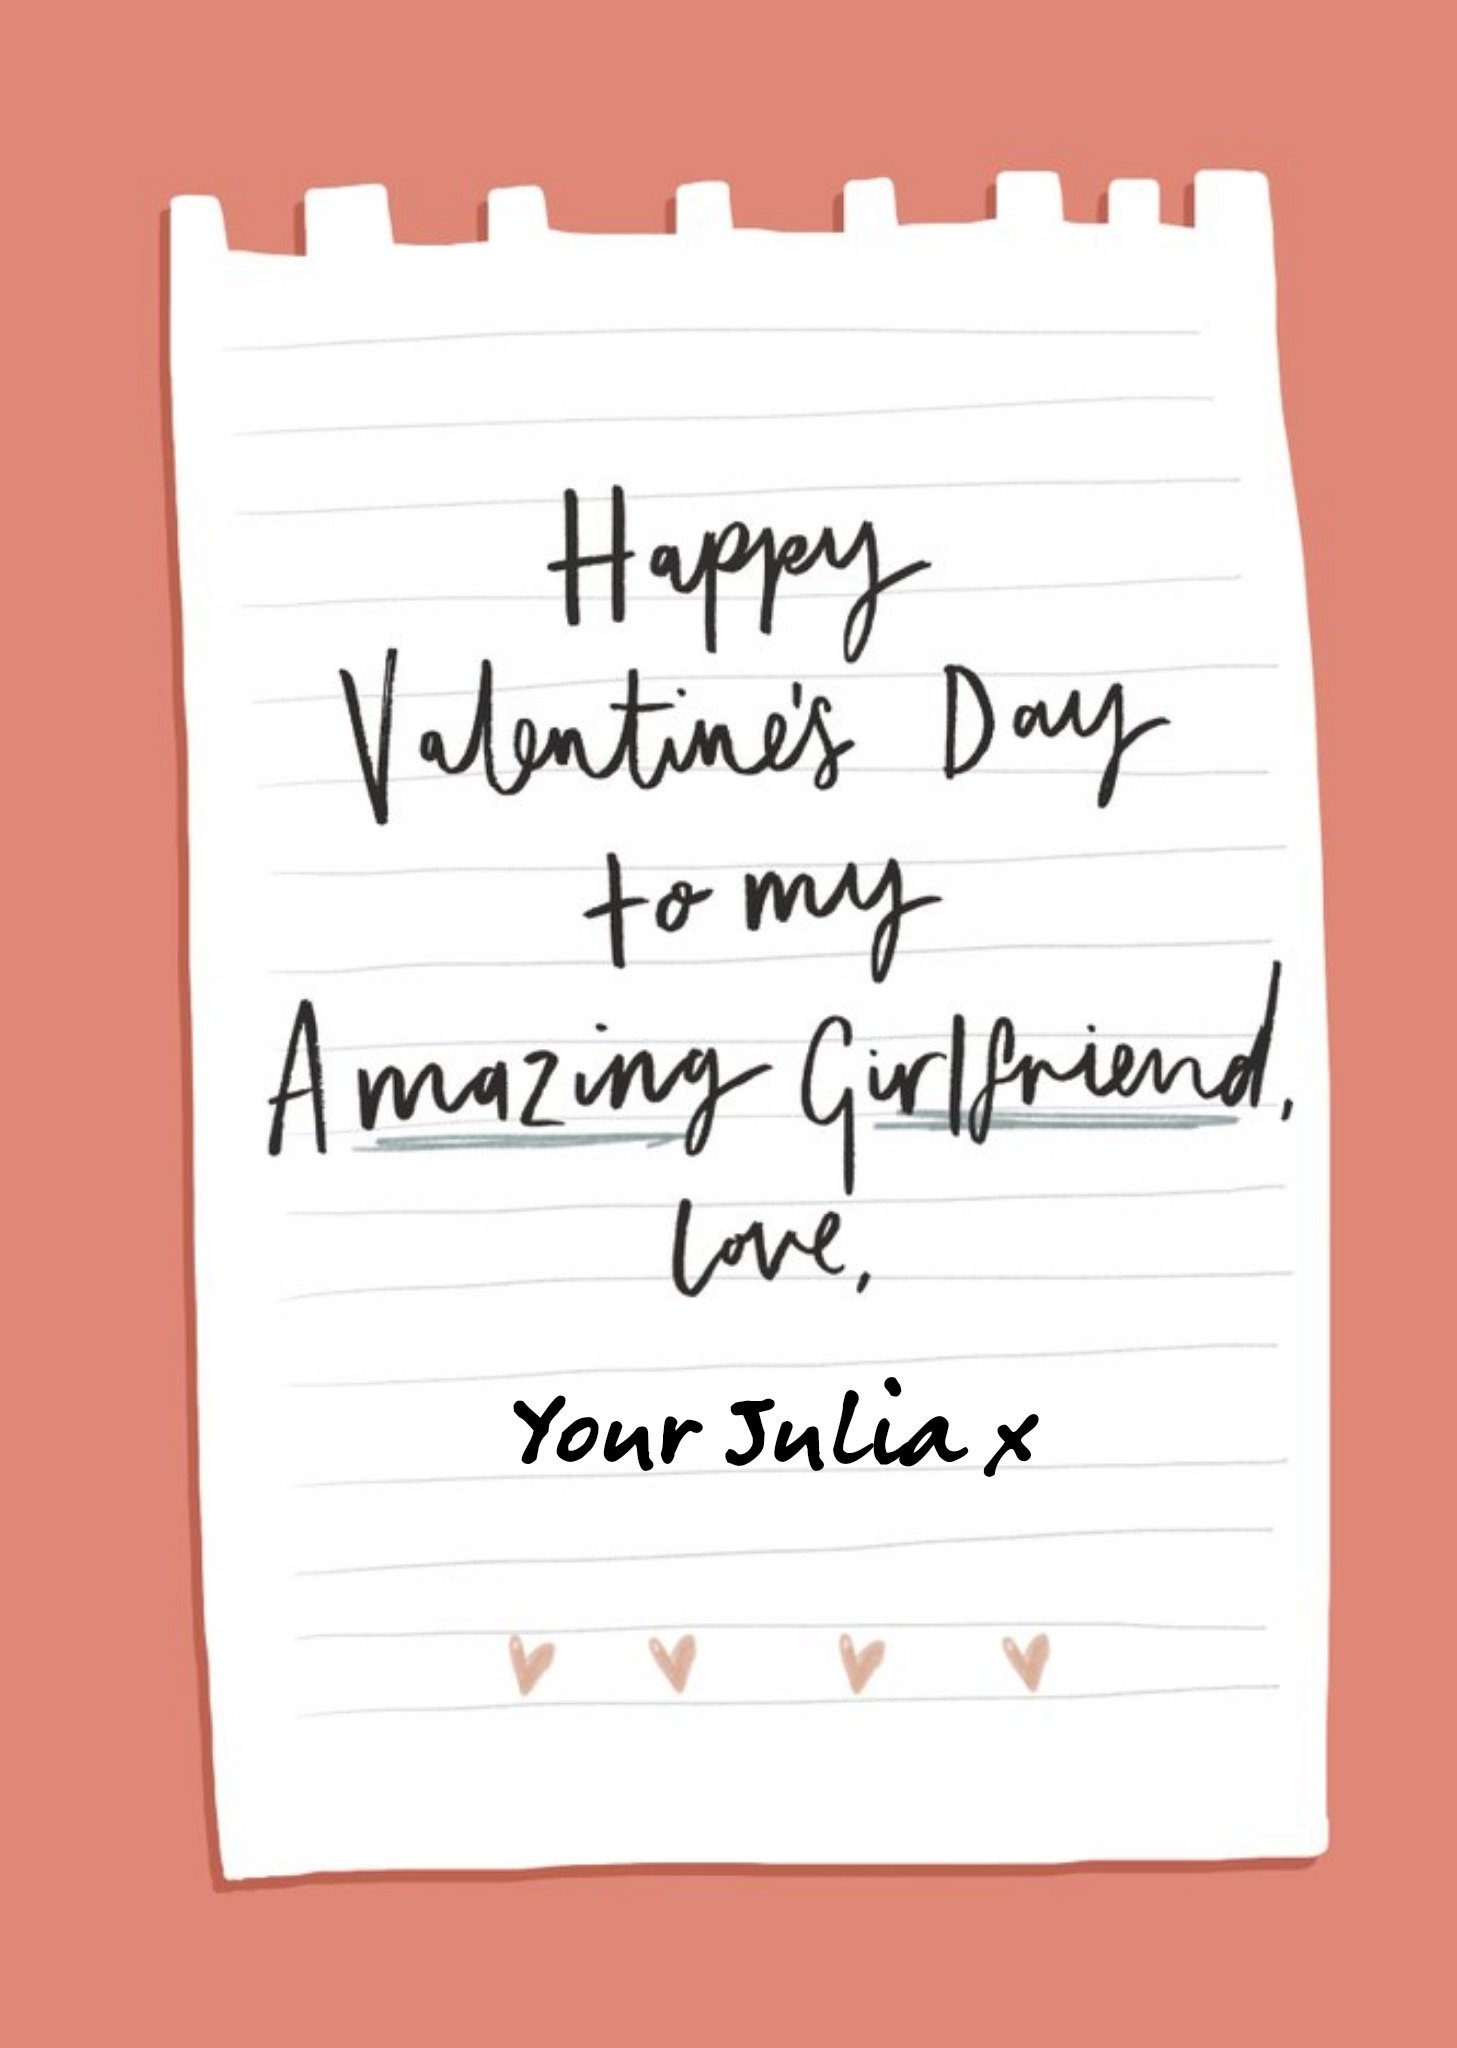 Love Hearts Sweet Sentiments Typographic Illustration LGBTQ+ Valentine's Card, Large